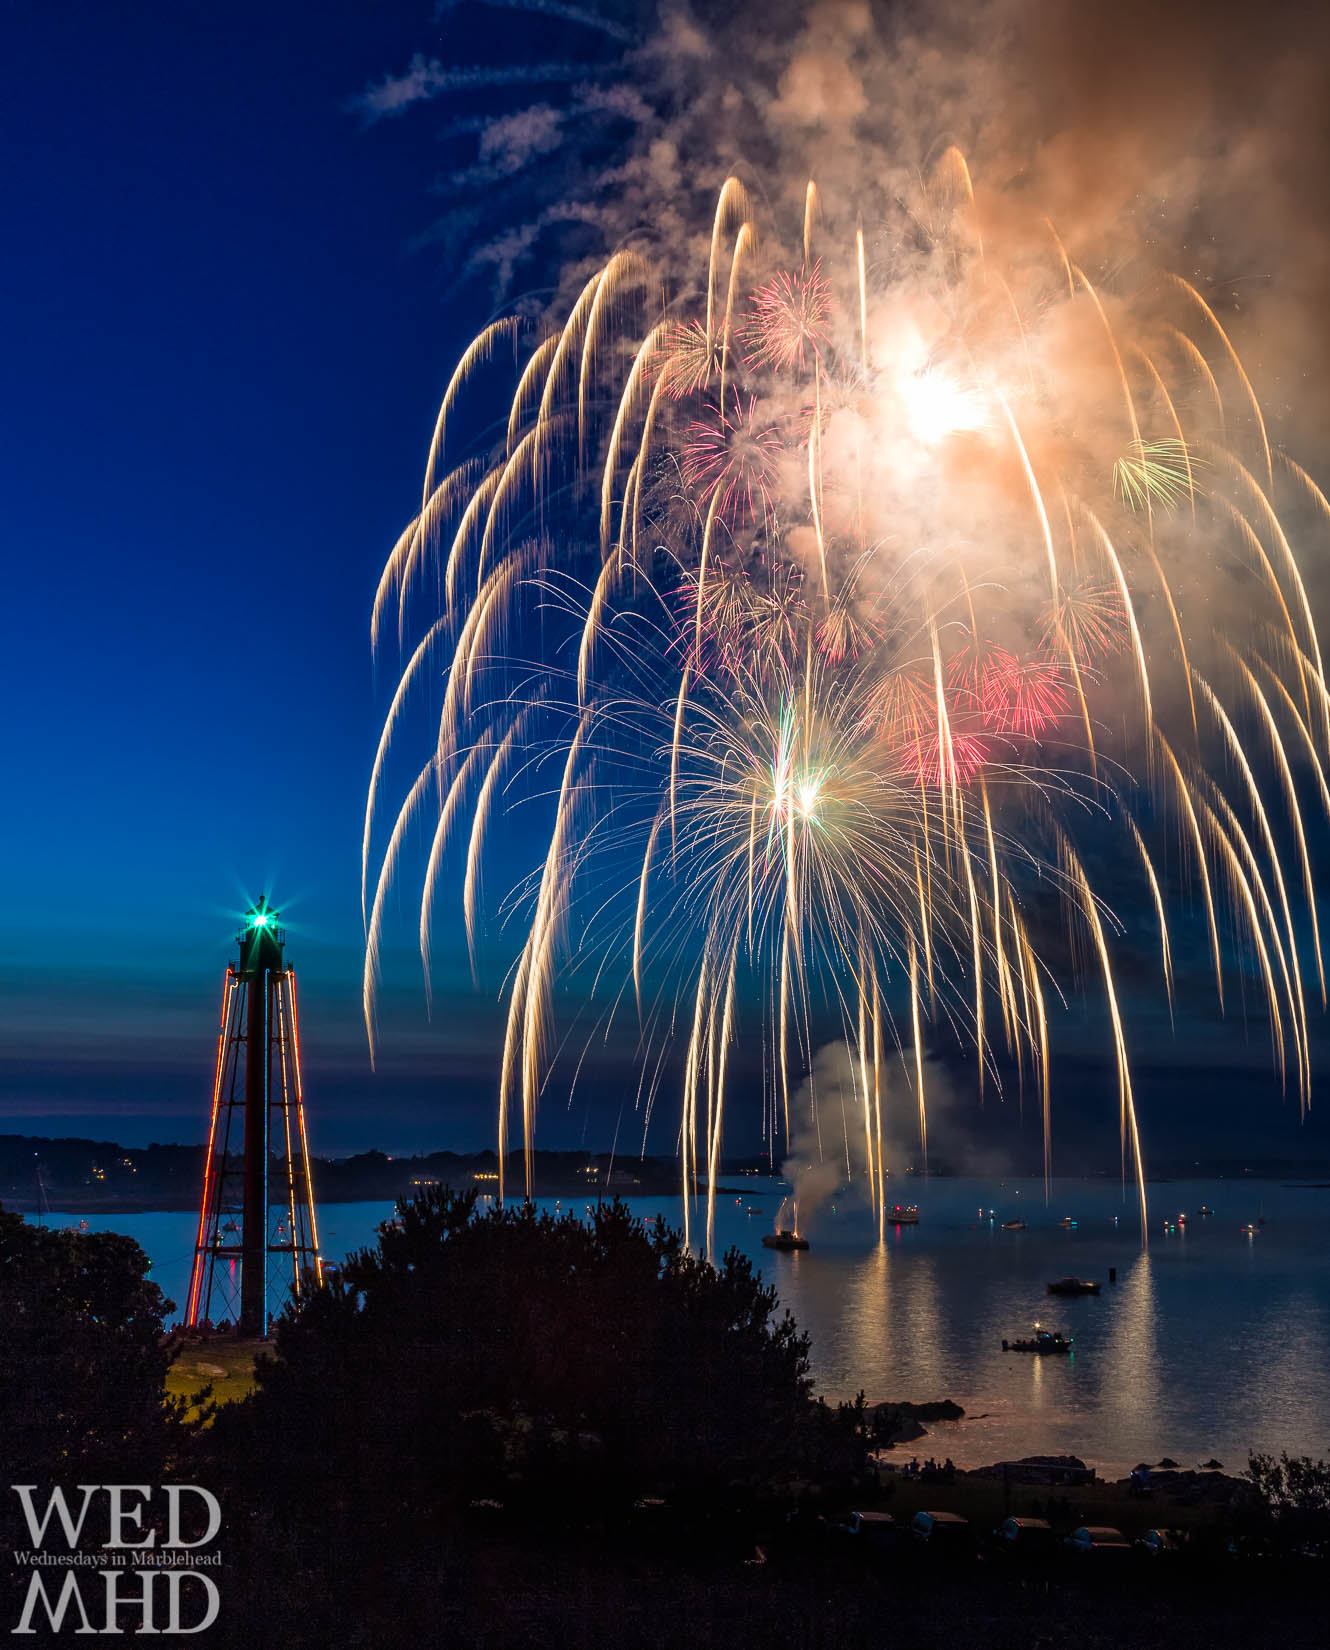 Marblehead Fireworks and Harbor Illumination Wednesdays in Marblehead